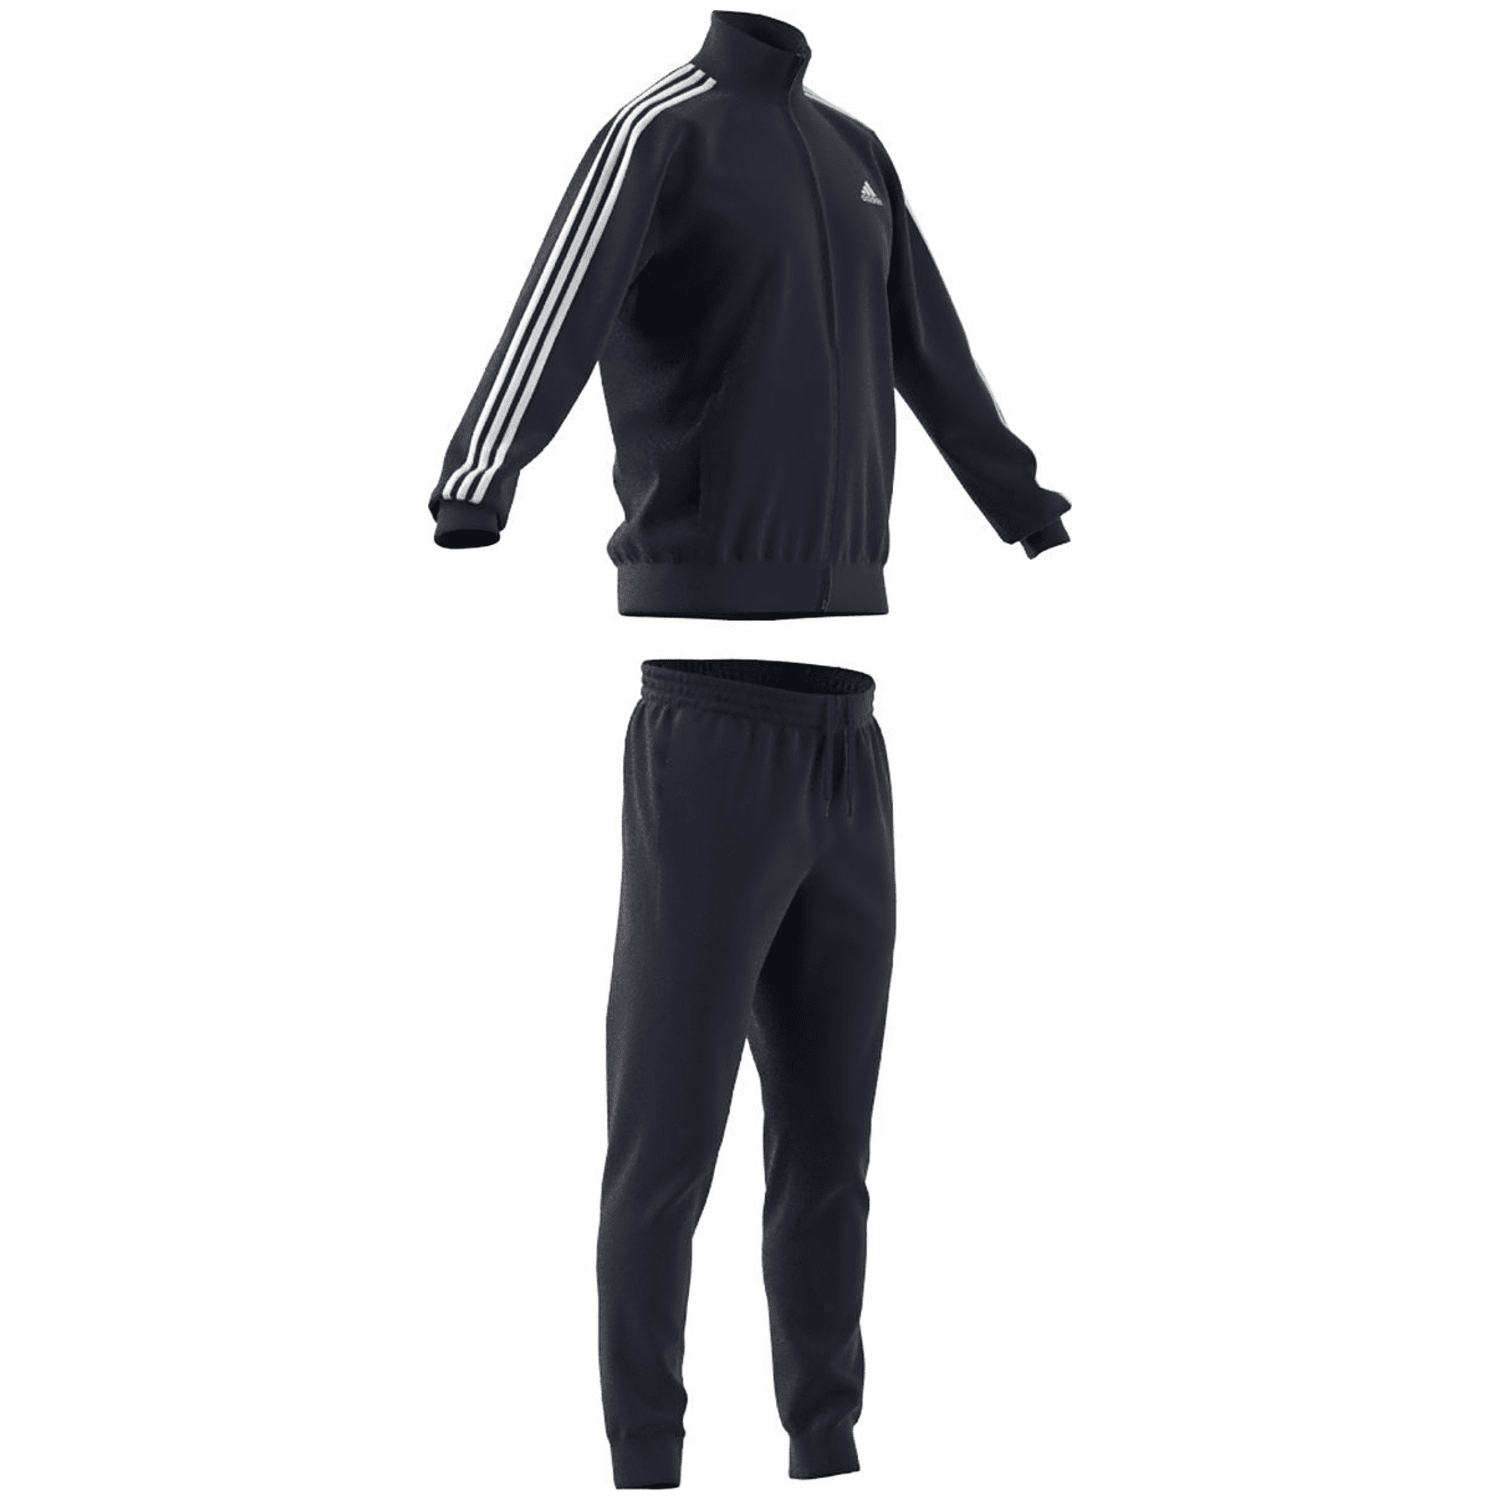 Adidas Basic 3-Streifen French Terry Trainingsanzug Herren